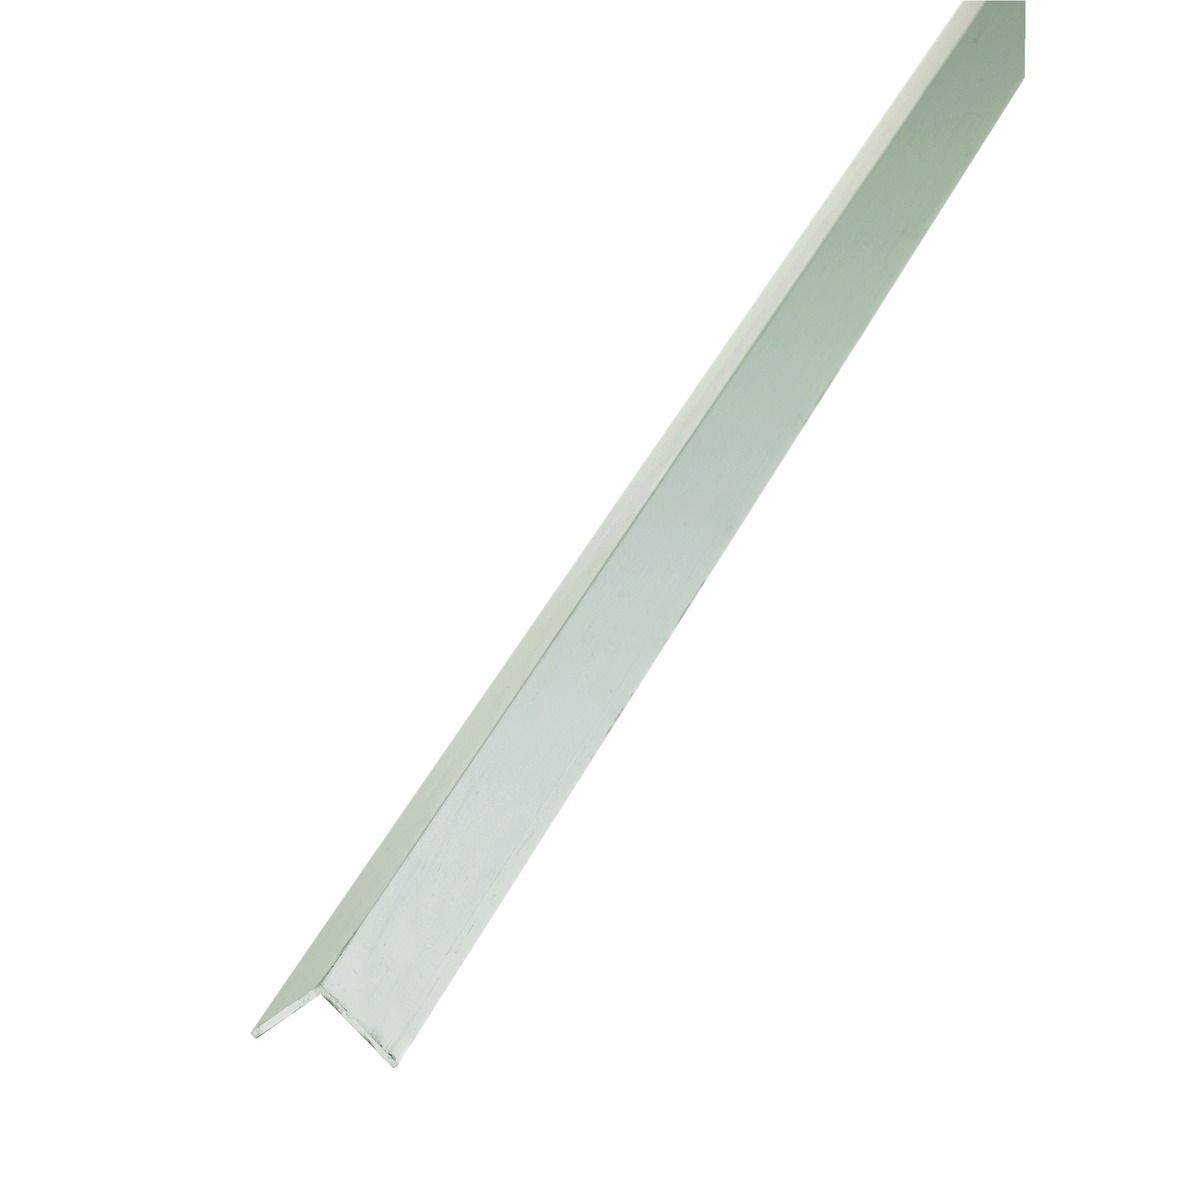 Image of Wickes Angle - Anodised Aluminium 10 x 14mm x 1m